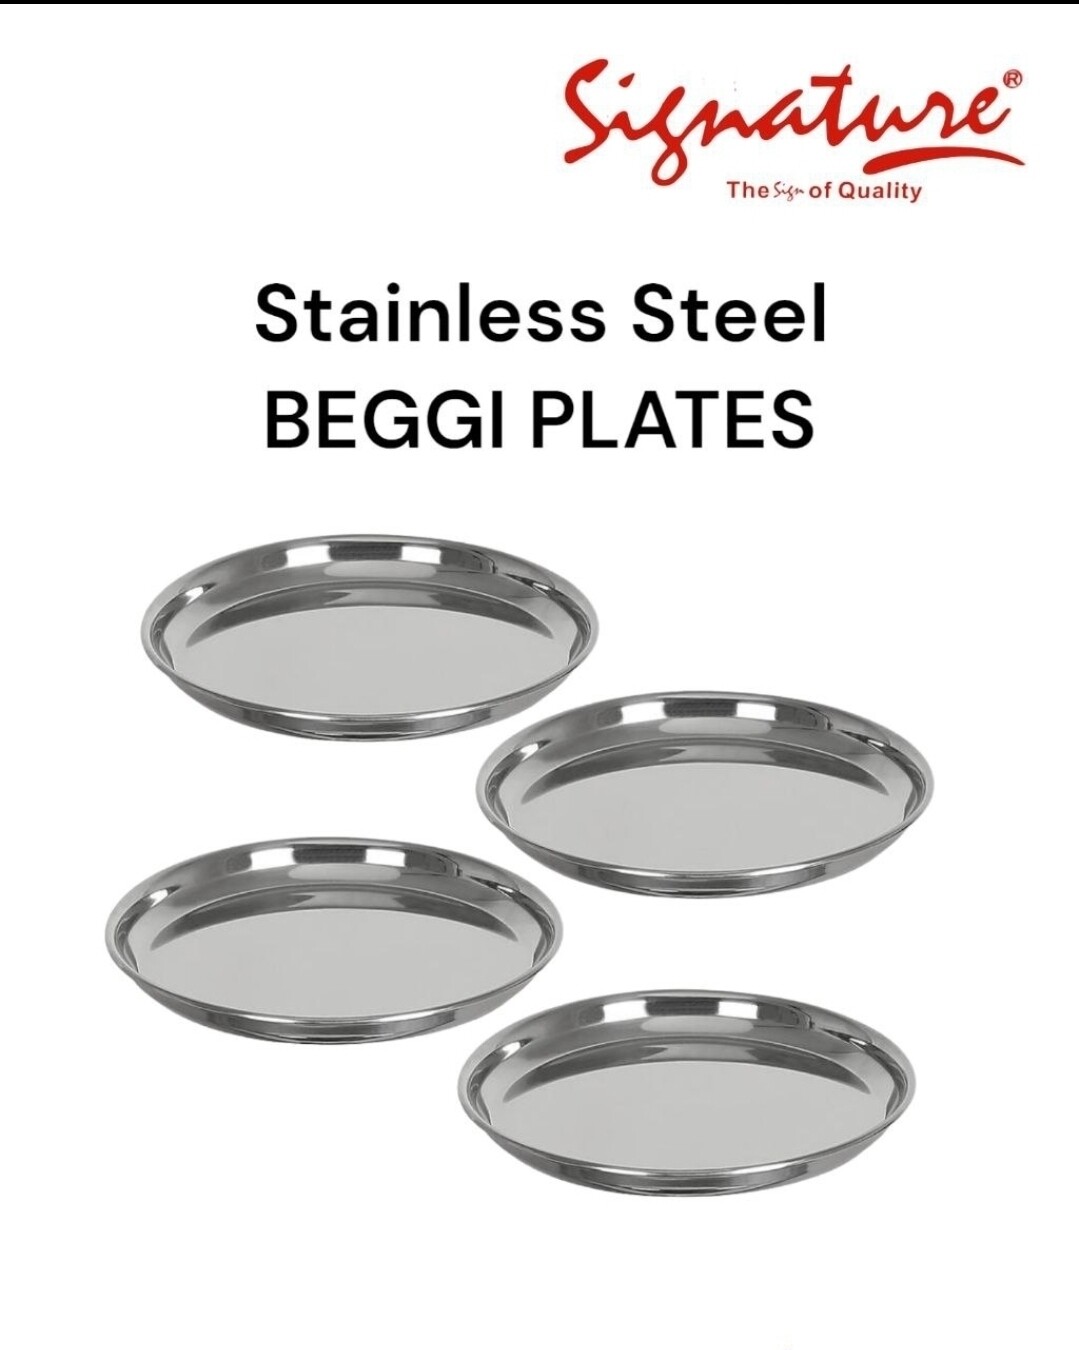 Signature 28cm stainless steel beggi plates